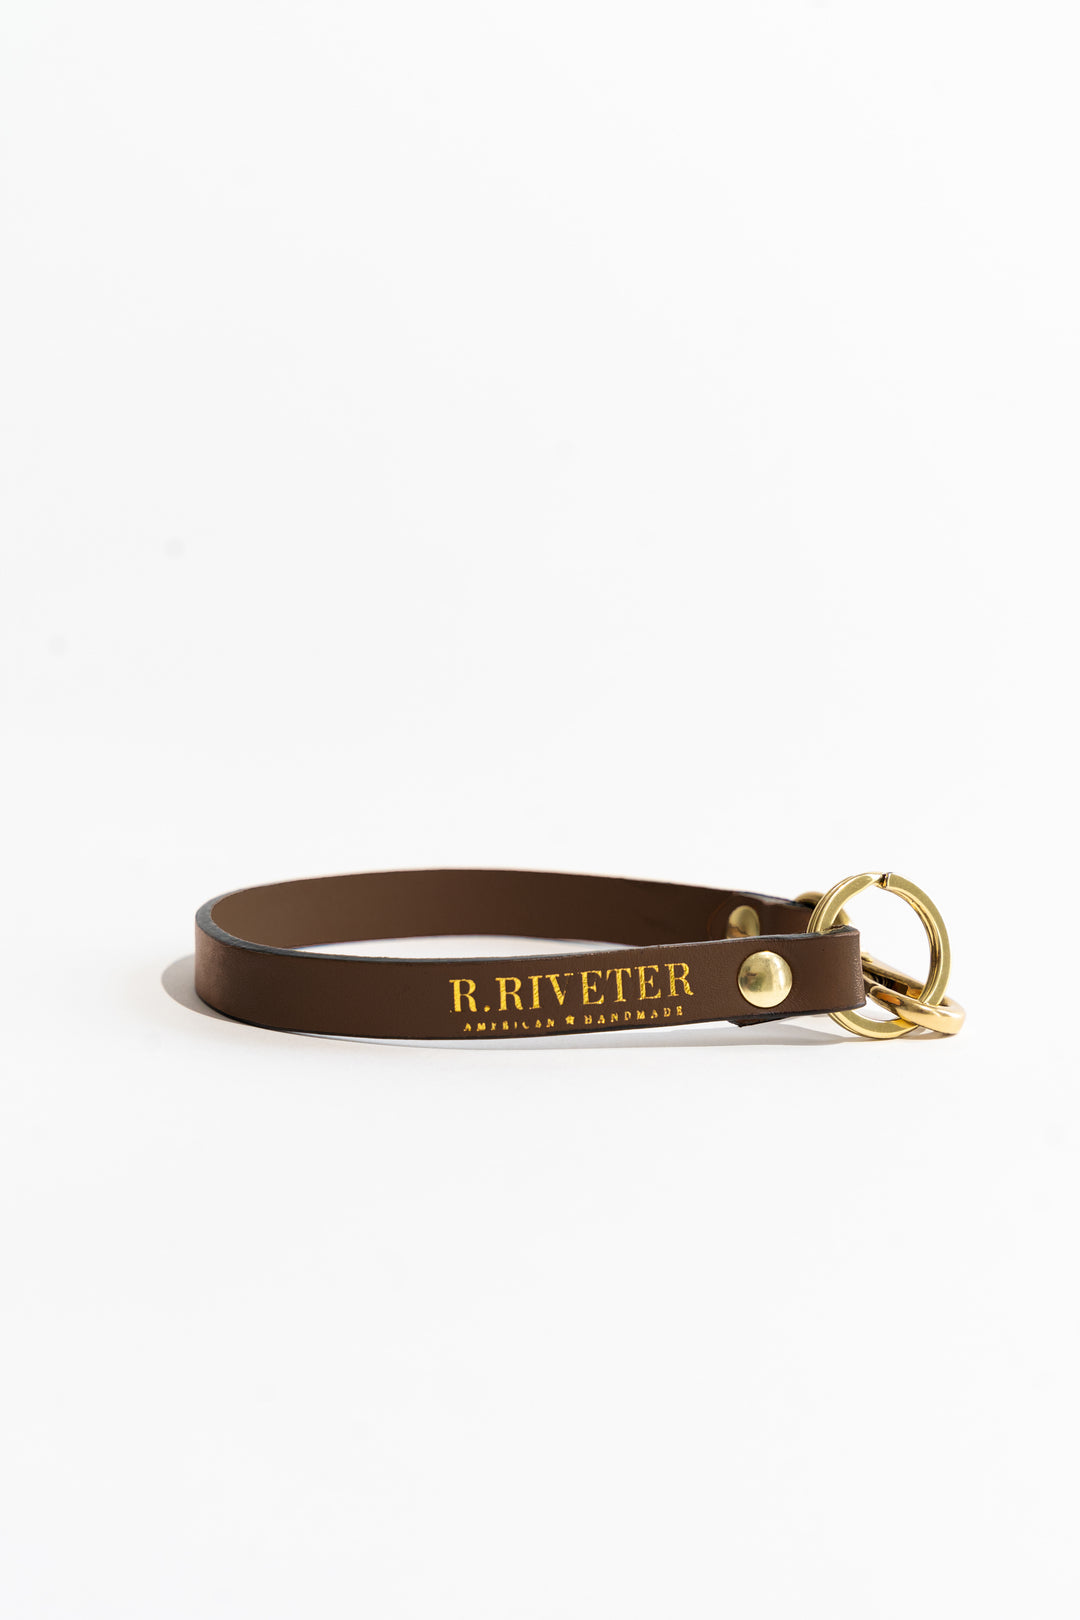 1943 Key Leash | Riveter Brown Leather